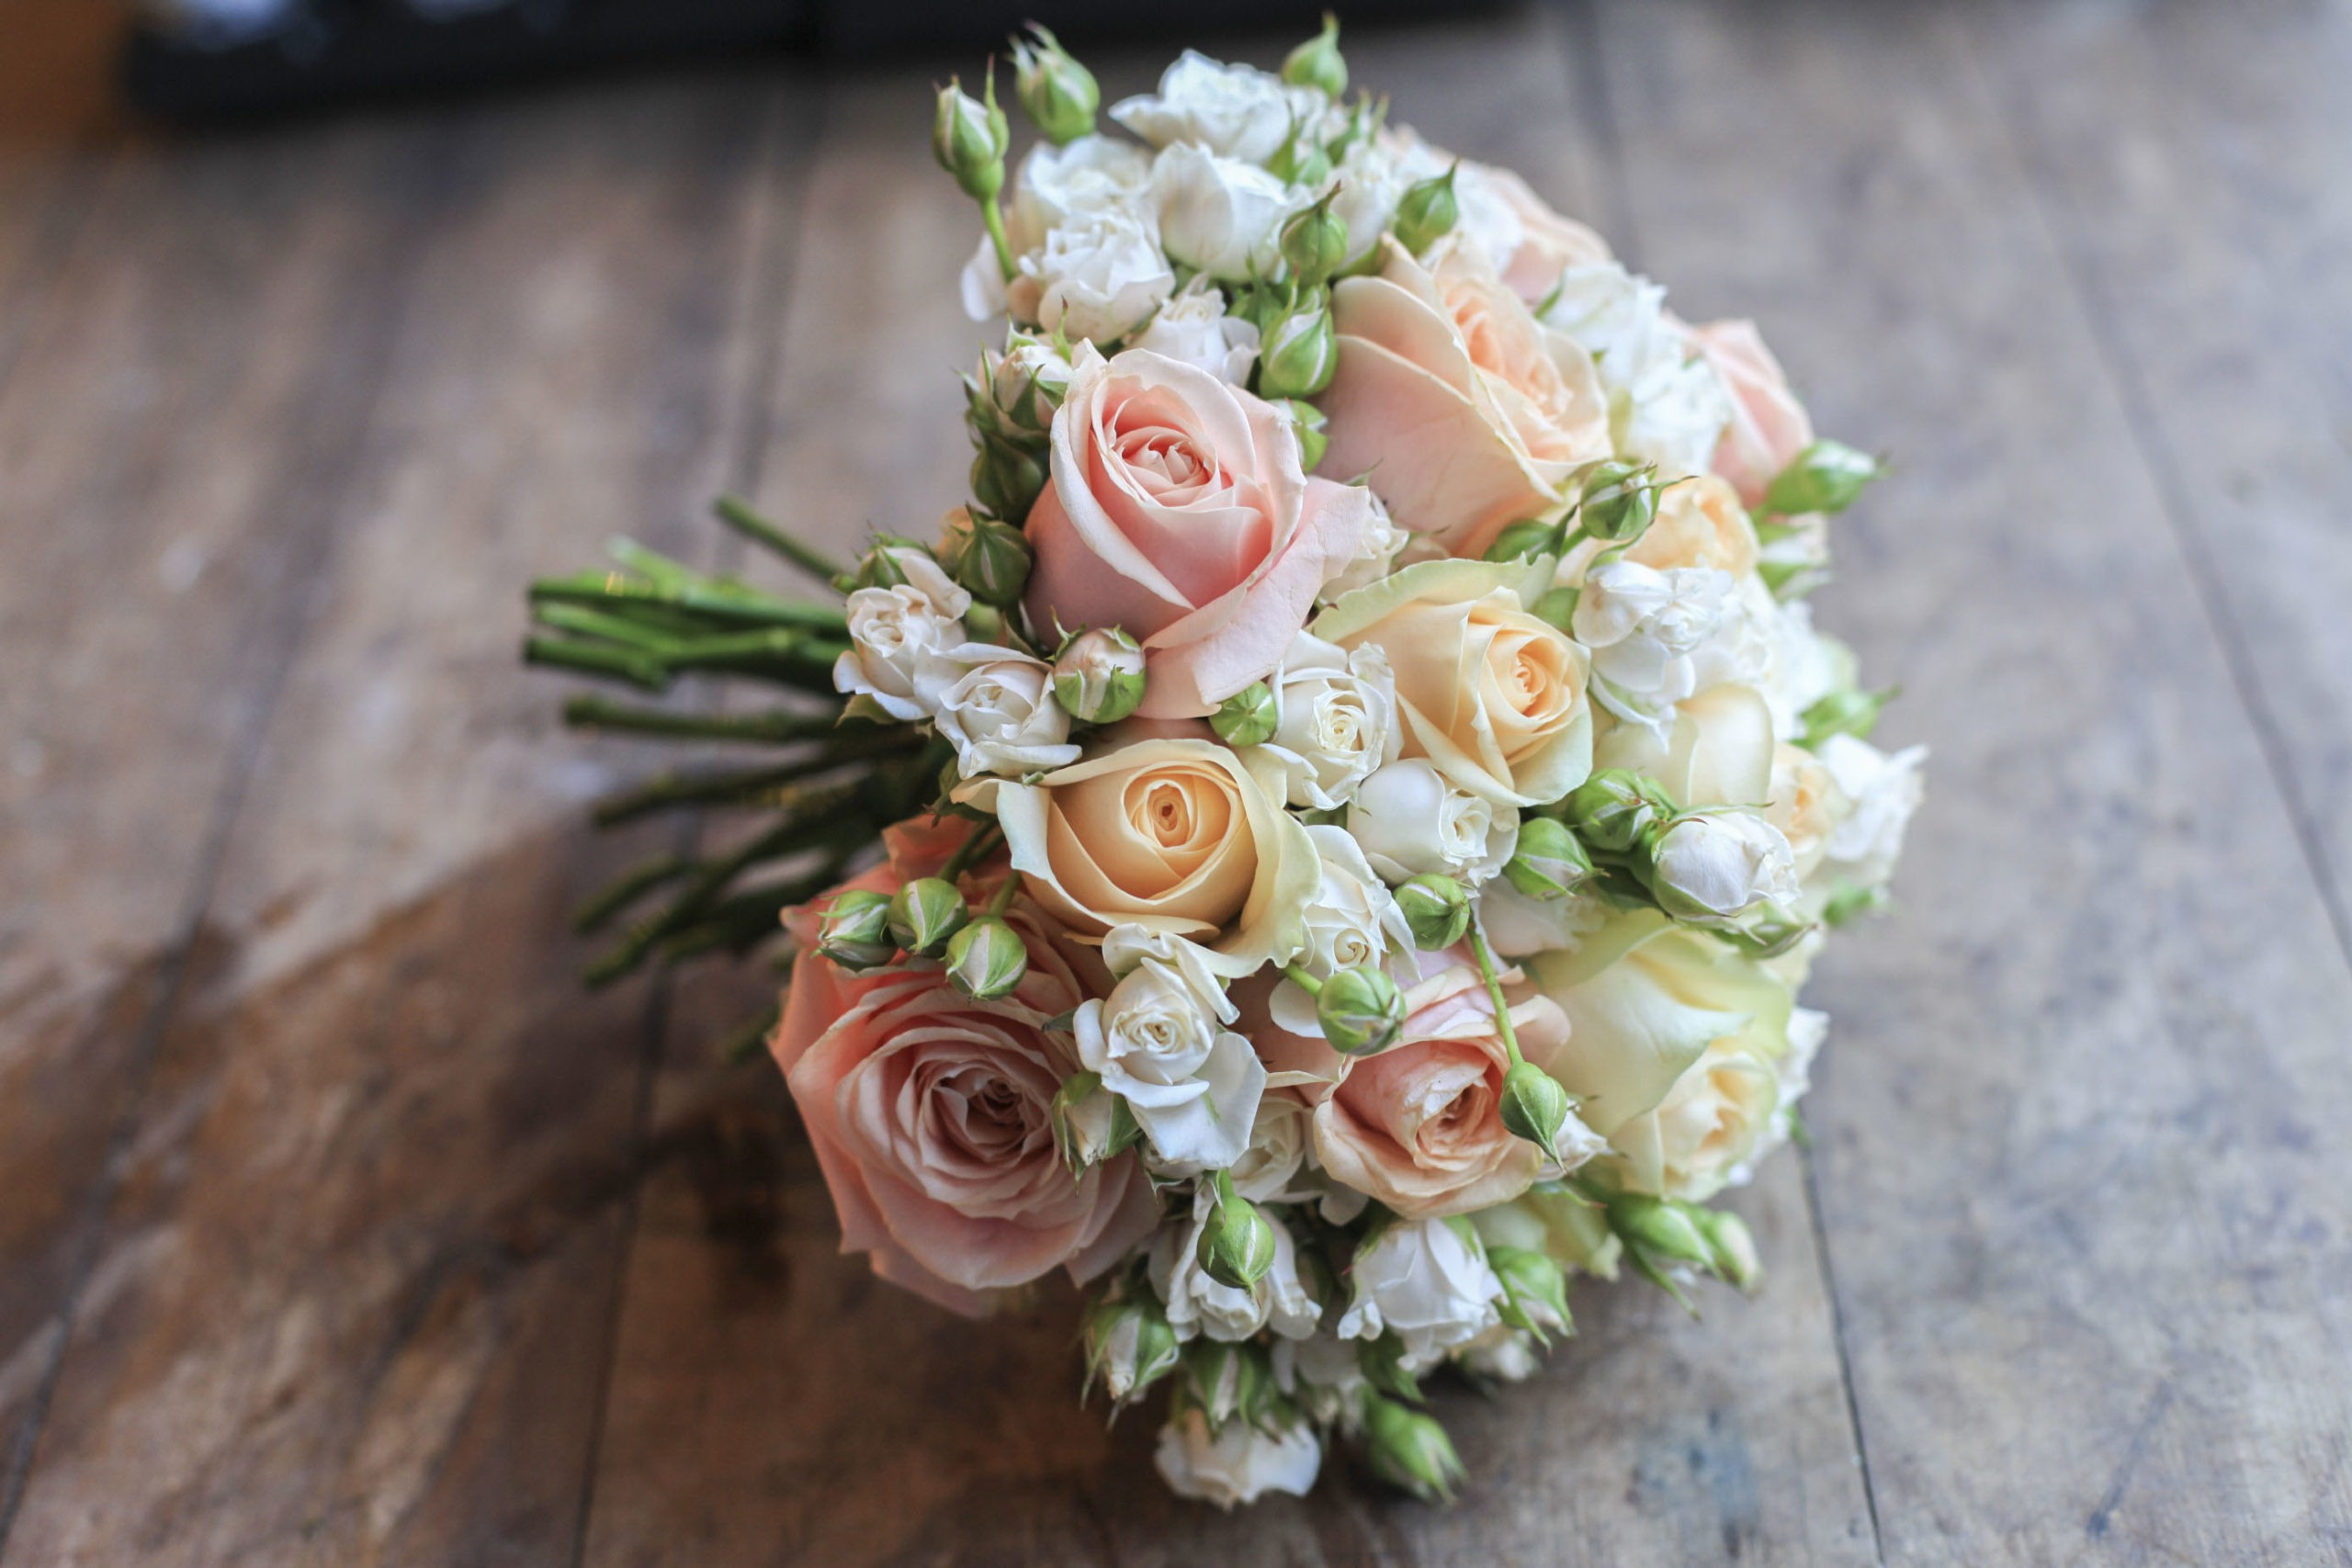 4 seasonal wedding bouquets from McQueens - Absolutely Weddings